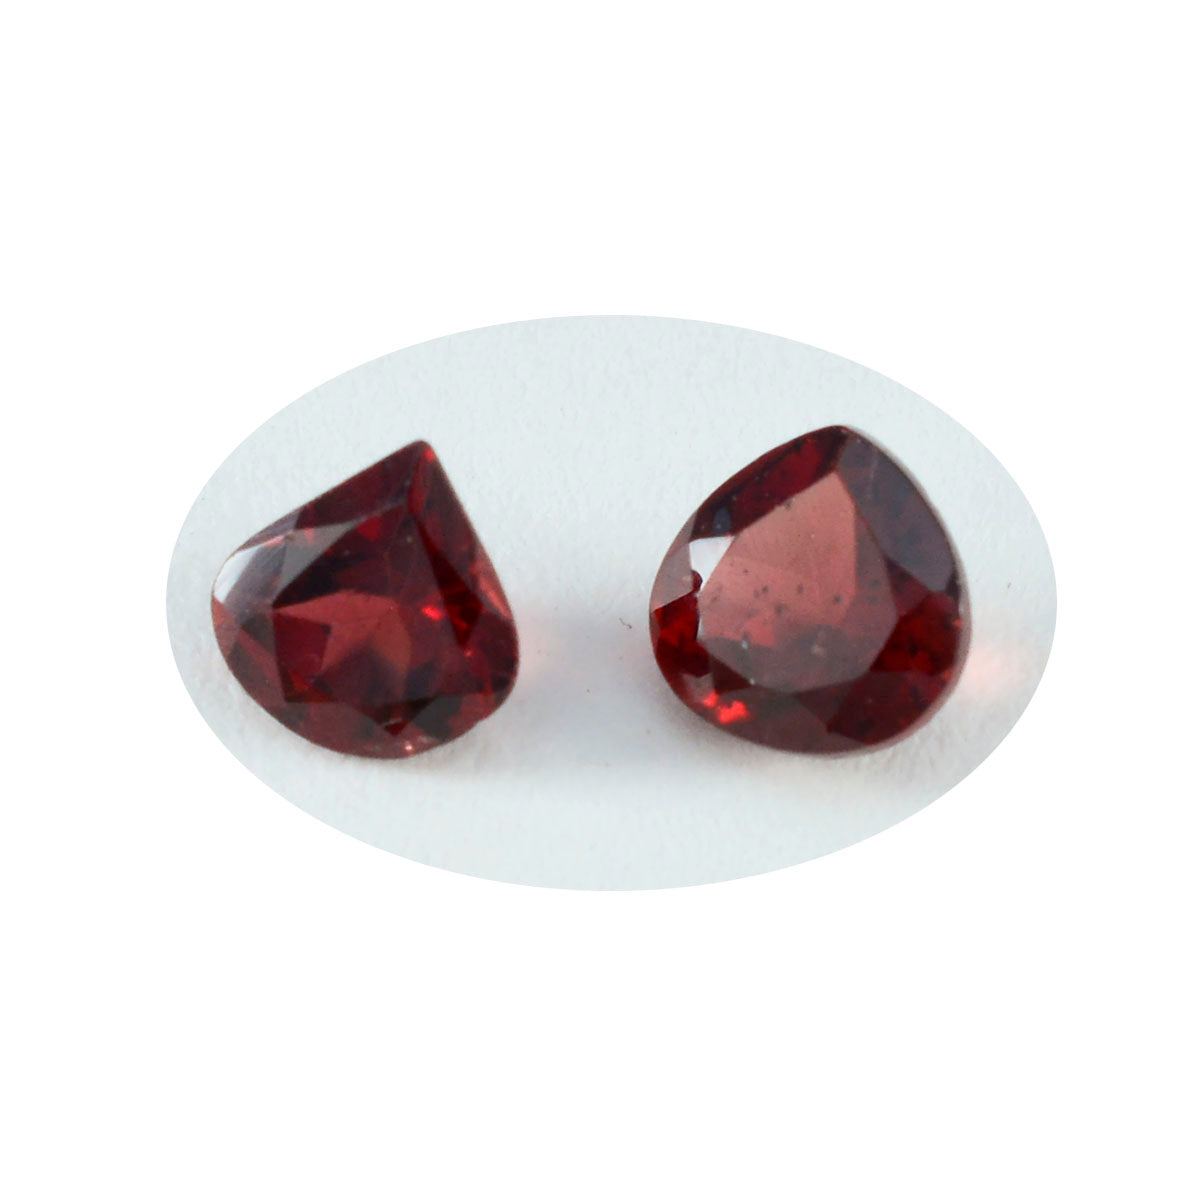 Riyogems 1PC Genuine Red Garnet Faceted 9x9 mm Heart Shape handsome Quality Gems